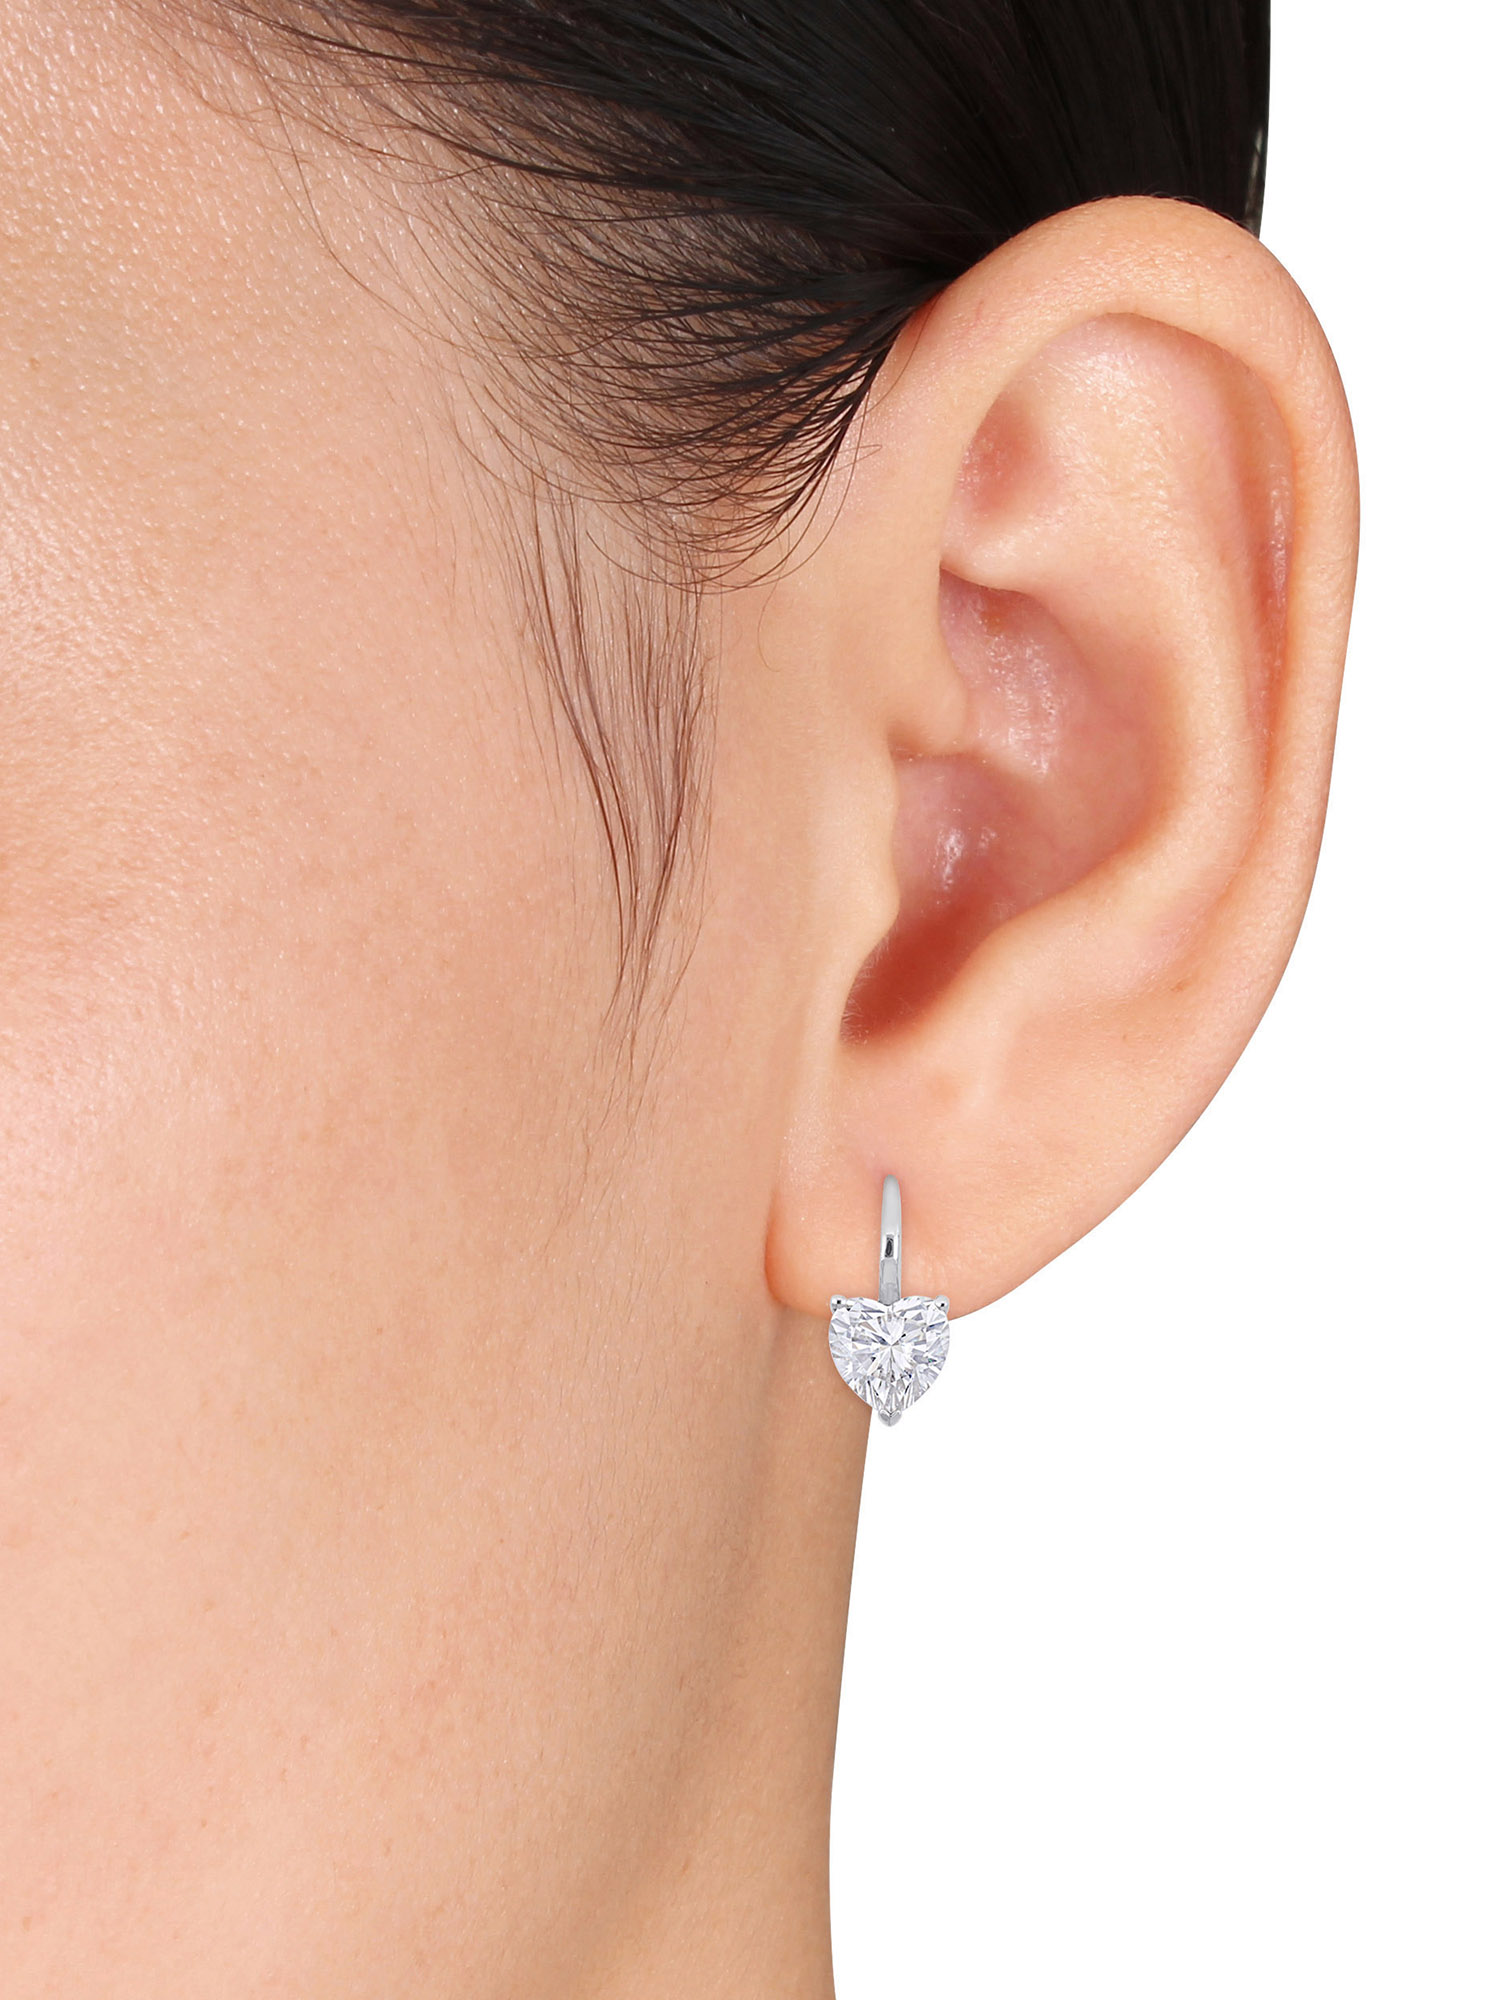 4 Carat T.G.W. Heart-Cut Moissanite 14k White Gold Solitaire Earrings - image 3 of 5